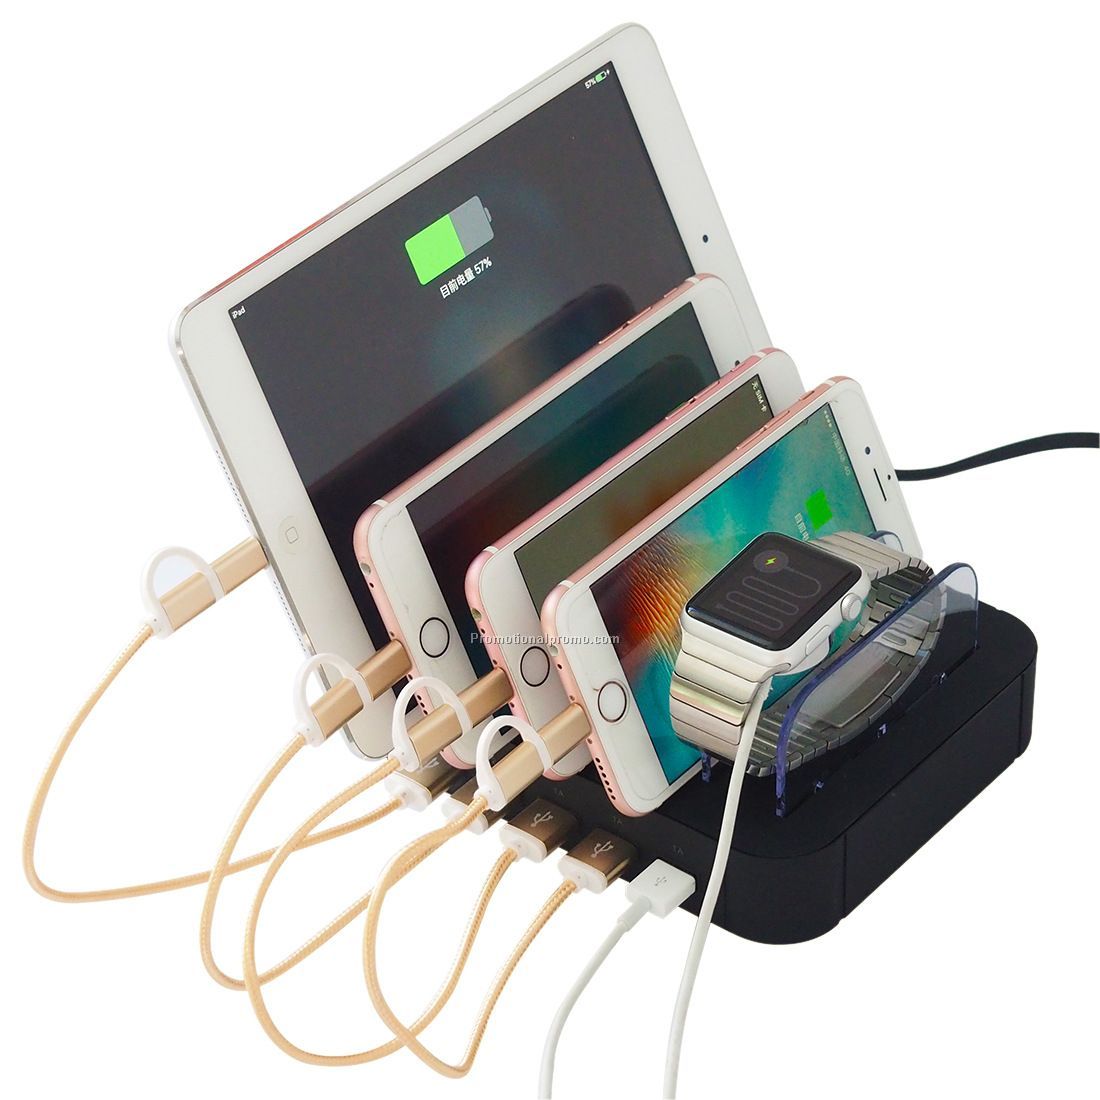 5 Ports USB charging station